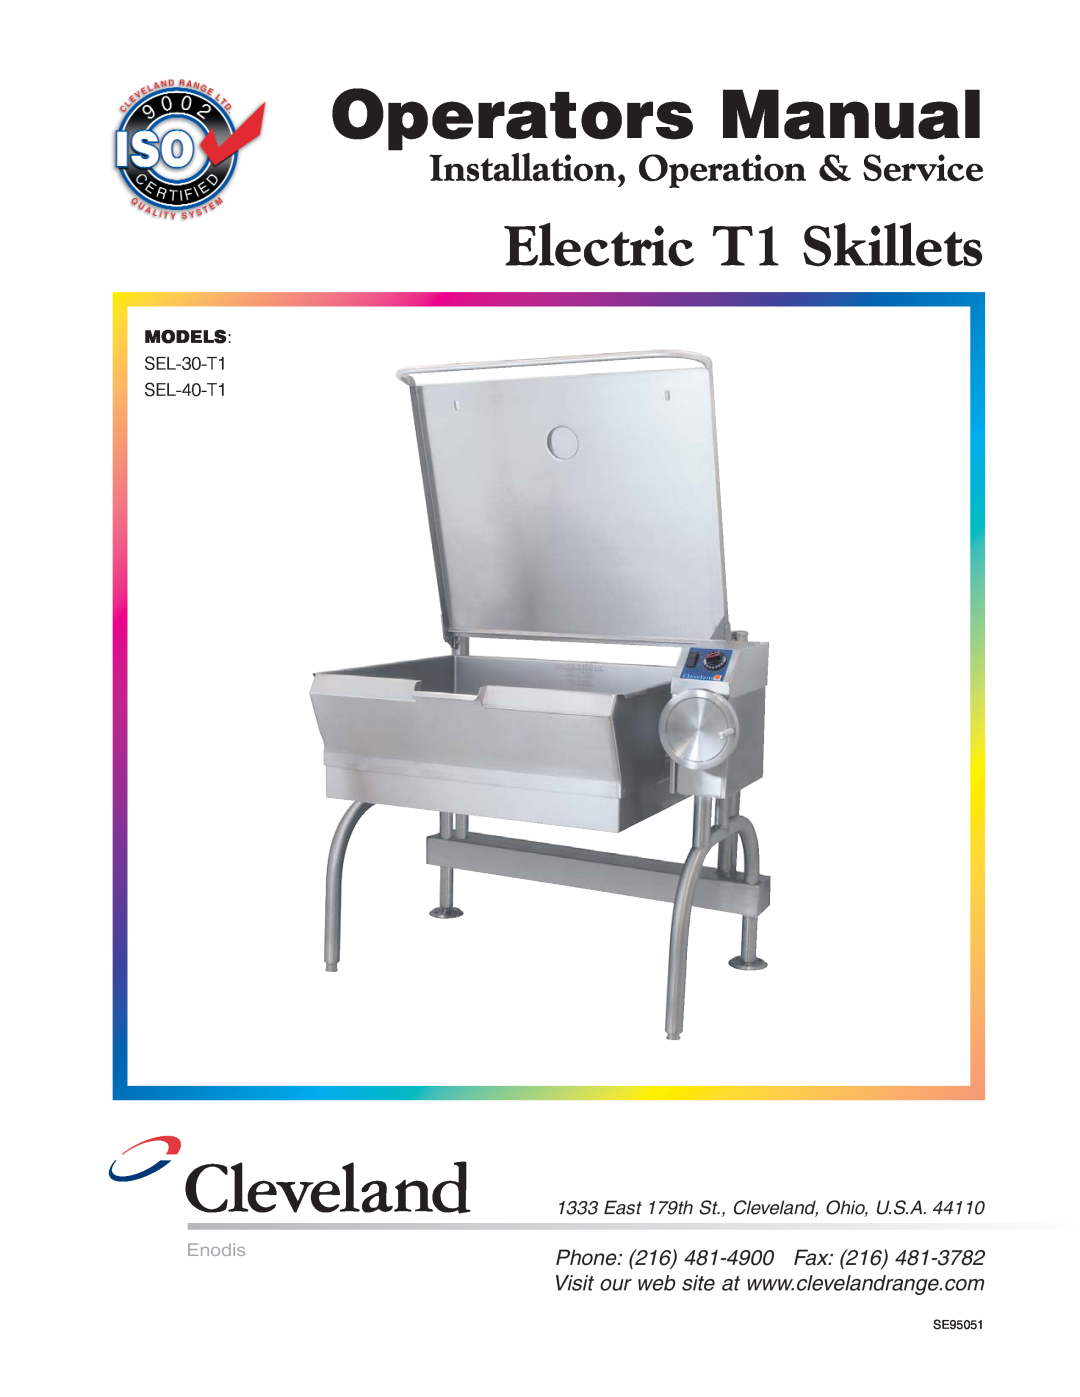 Cleveland Range SEL-40-T1 manual Operators Manual, Electric T1 Skillets, Installation, Operation & Service, Models, Enodis 